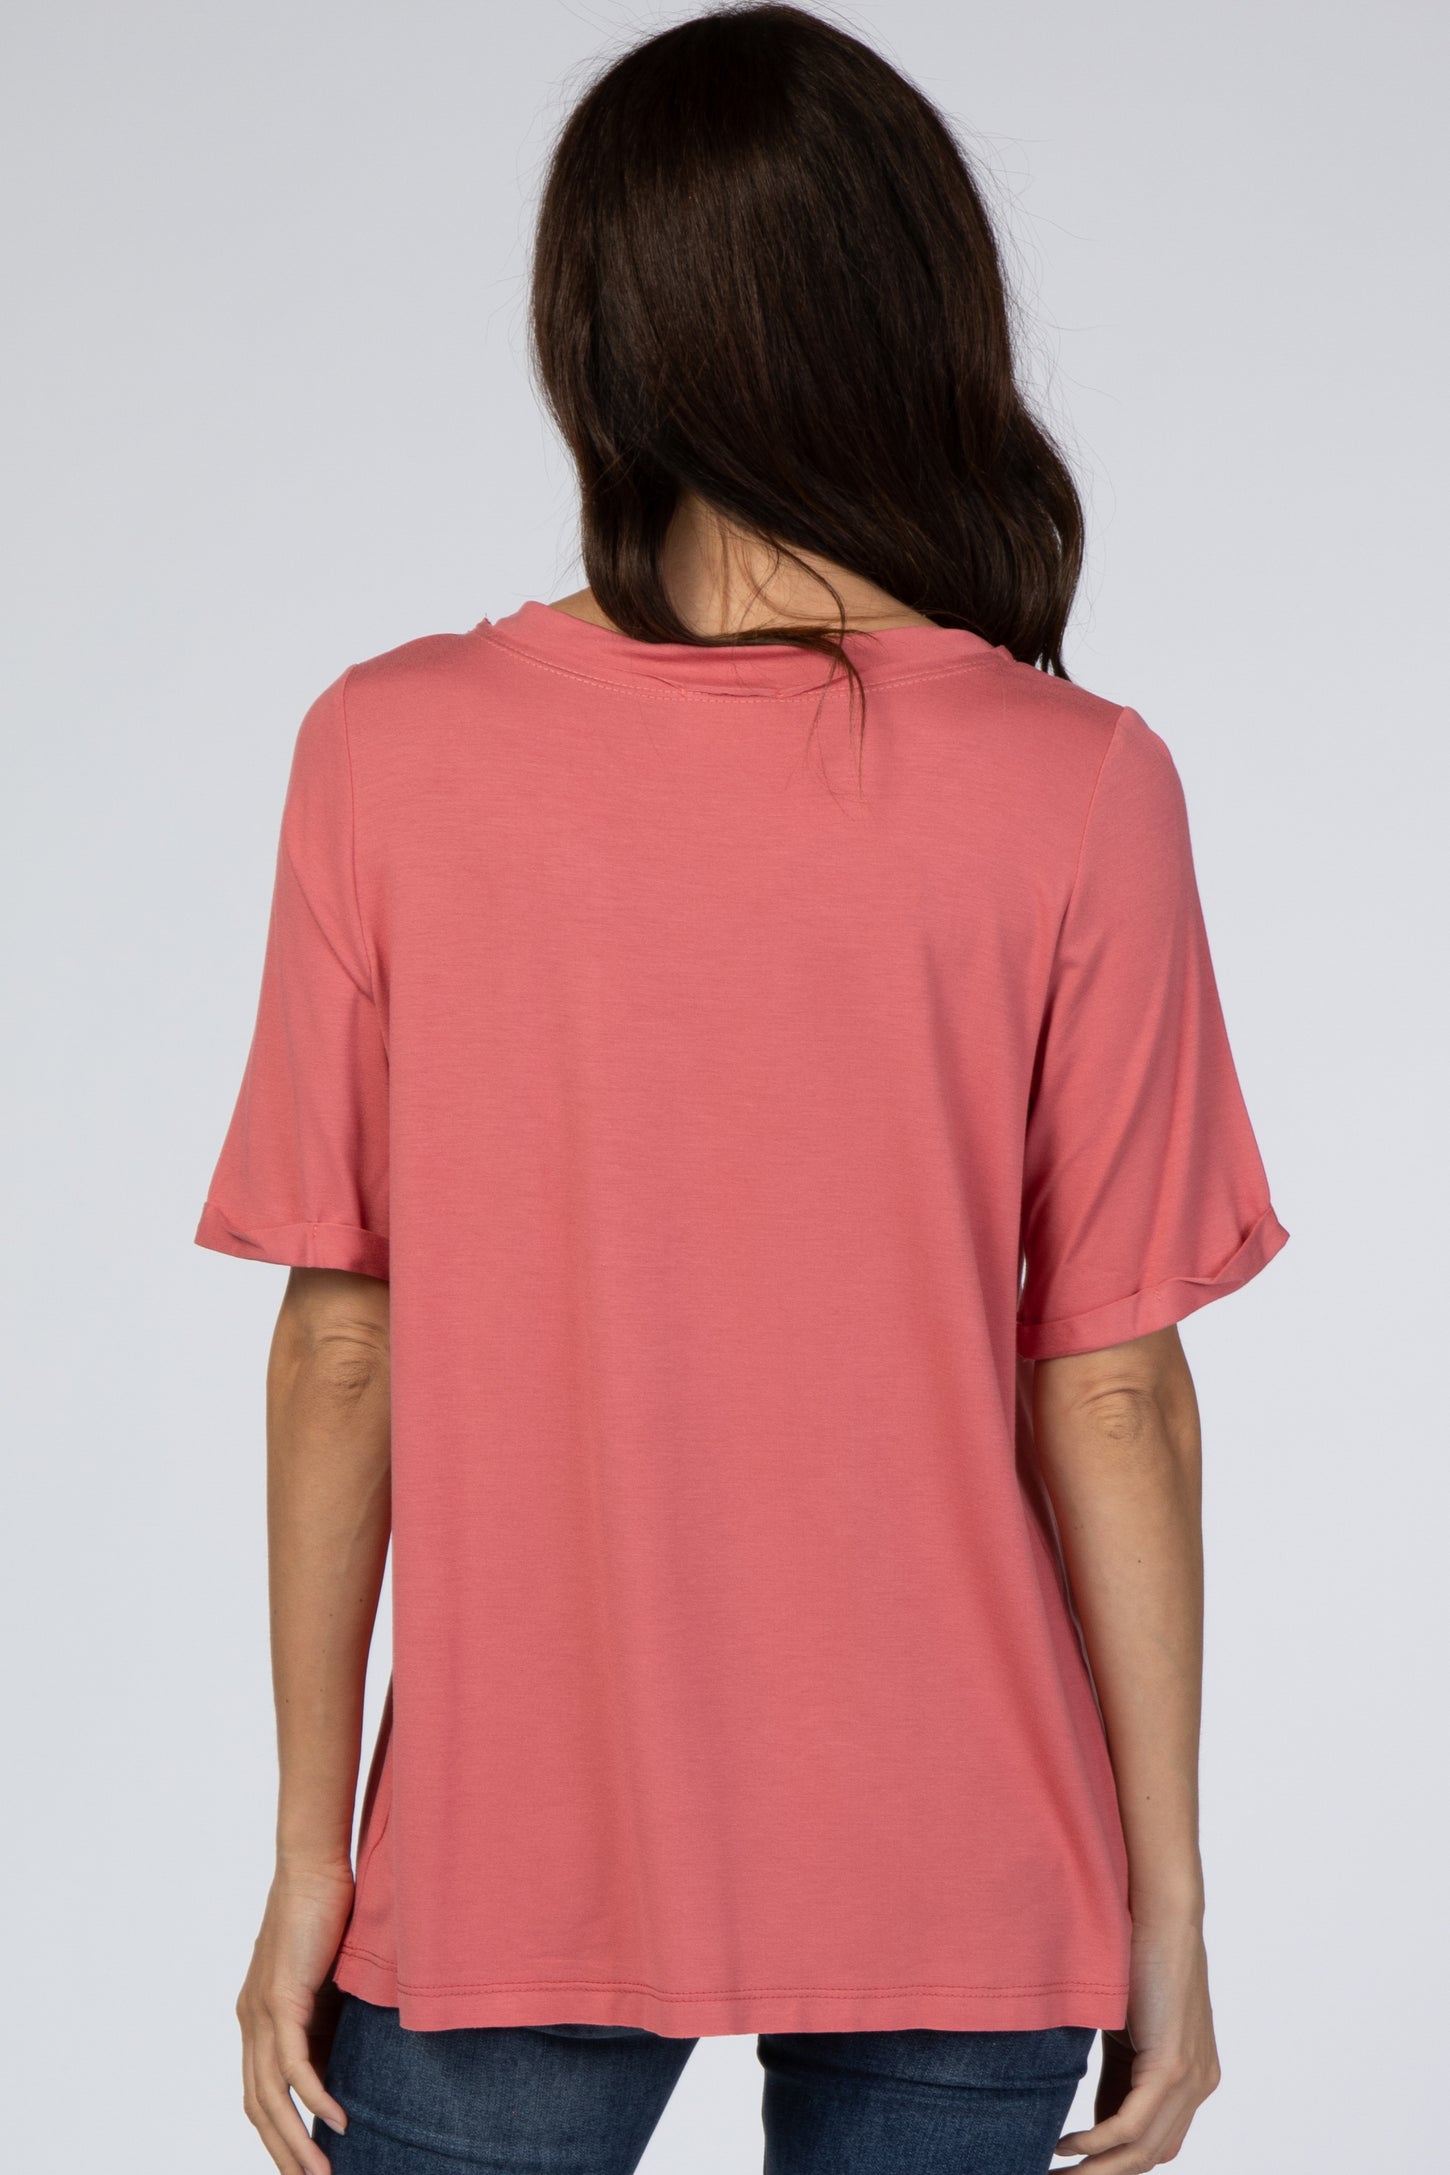 Mauve V-Neck T-Shirt Top